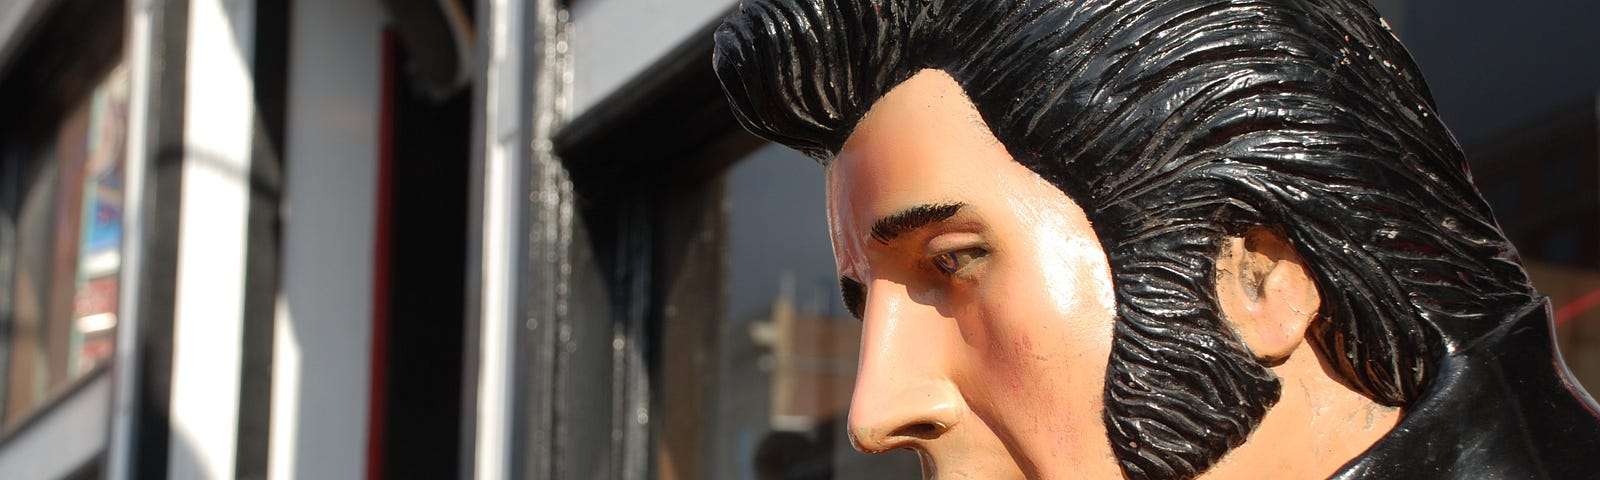 A statue of Elvis Presley